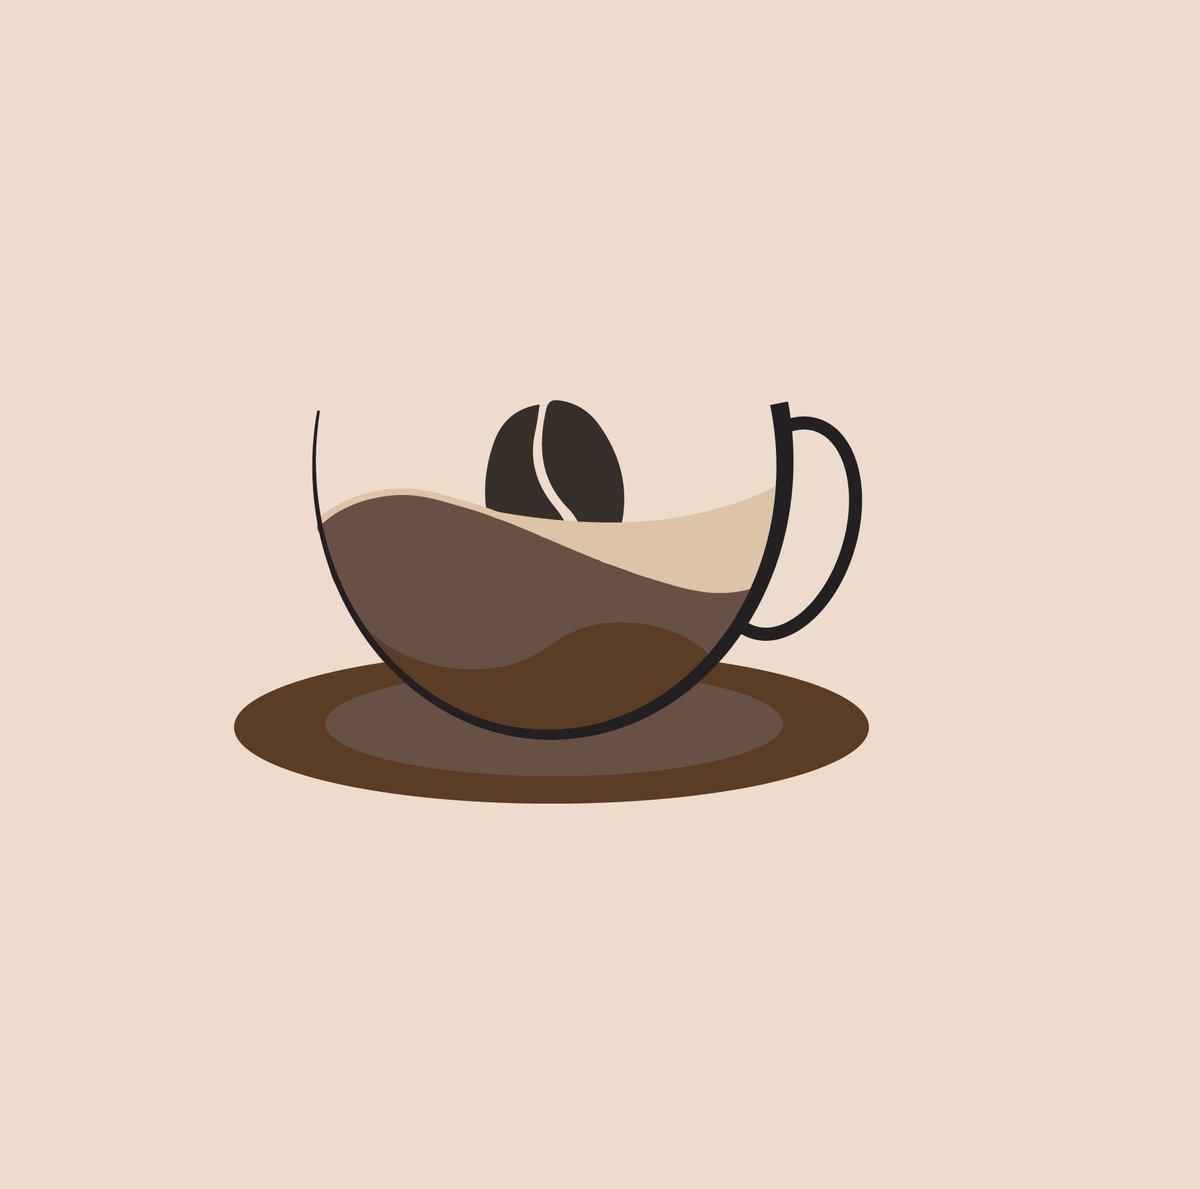 Oh shit beech. Here's my logo tweet for yesterday. 
#dailylogochallenge #coffeebrand #coffeeshop